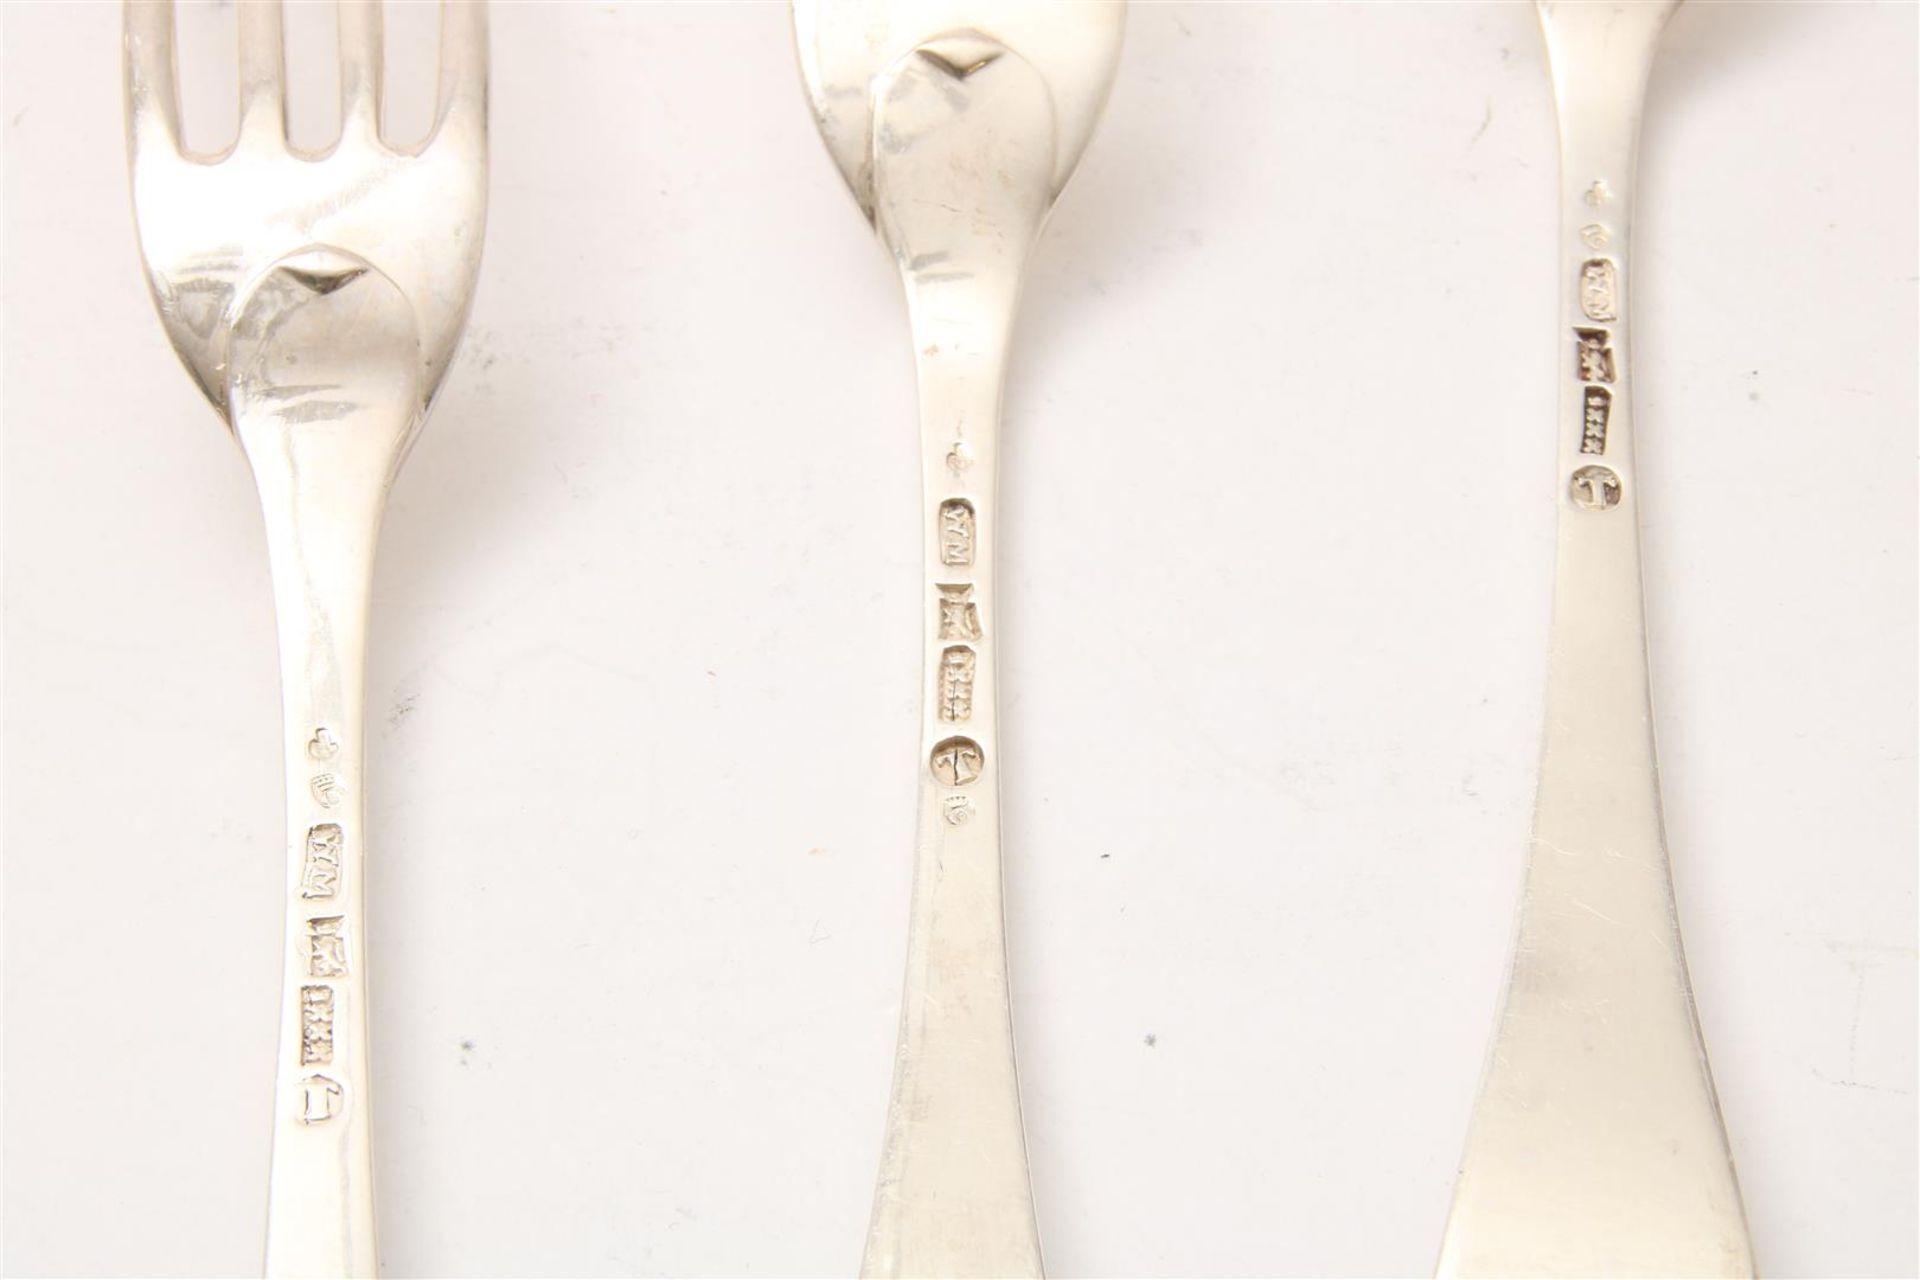 Set of 12 silver large spoons, alloy 925/000, Amsterdam, master mark: "WM": Jan Woortman, year stamp - Image 4 of 4